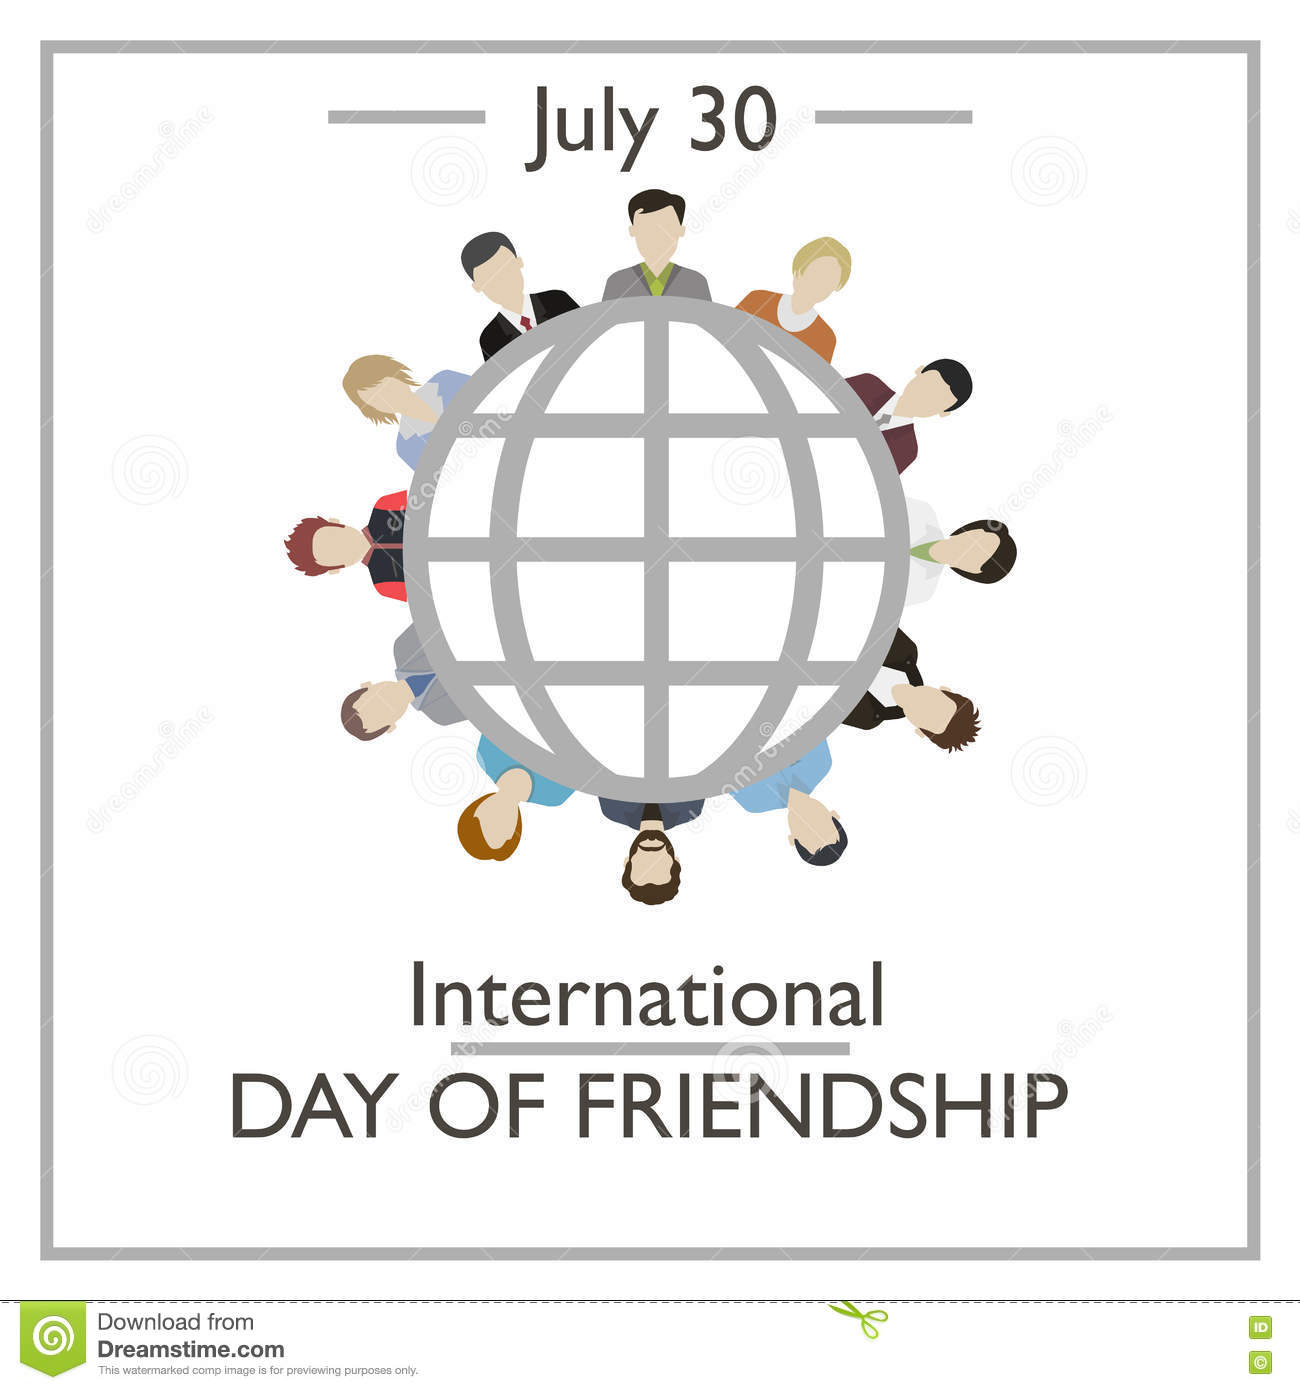 international day of friendship illustration